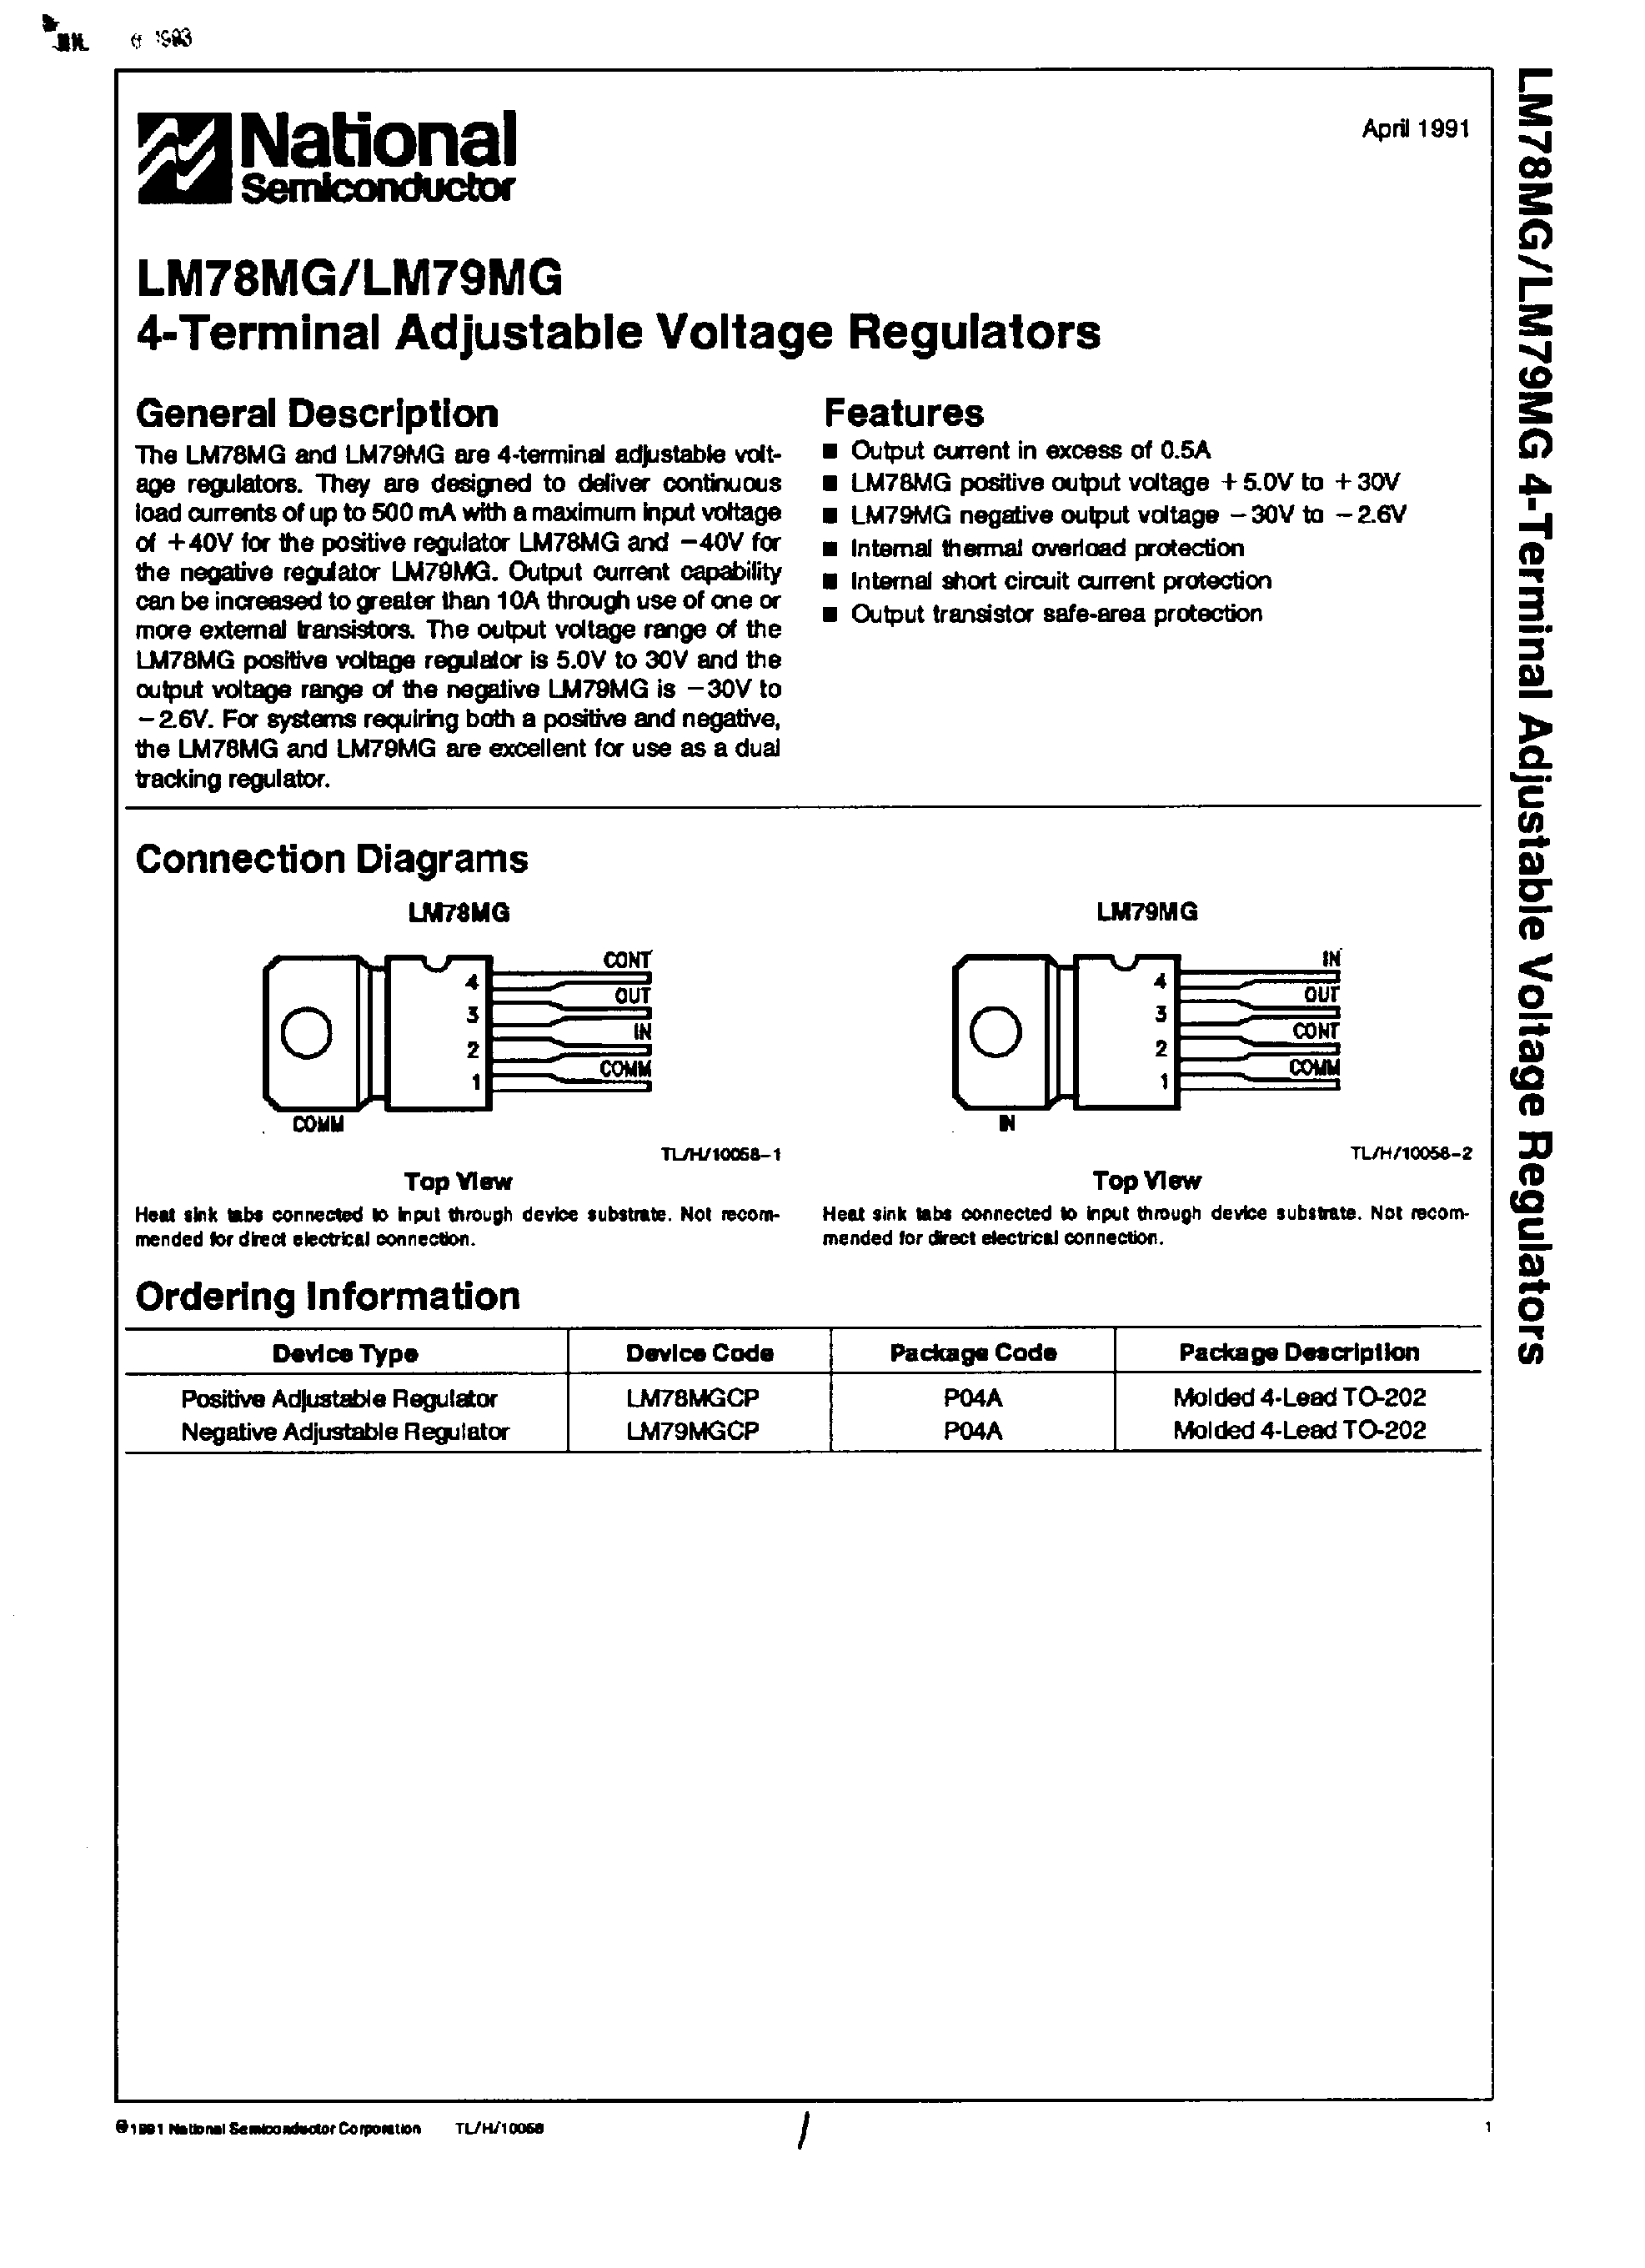 Datasheet LM79MG - 4 Treminal Adjustable Voltage Regulators page 1